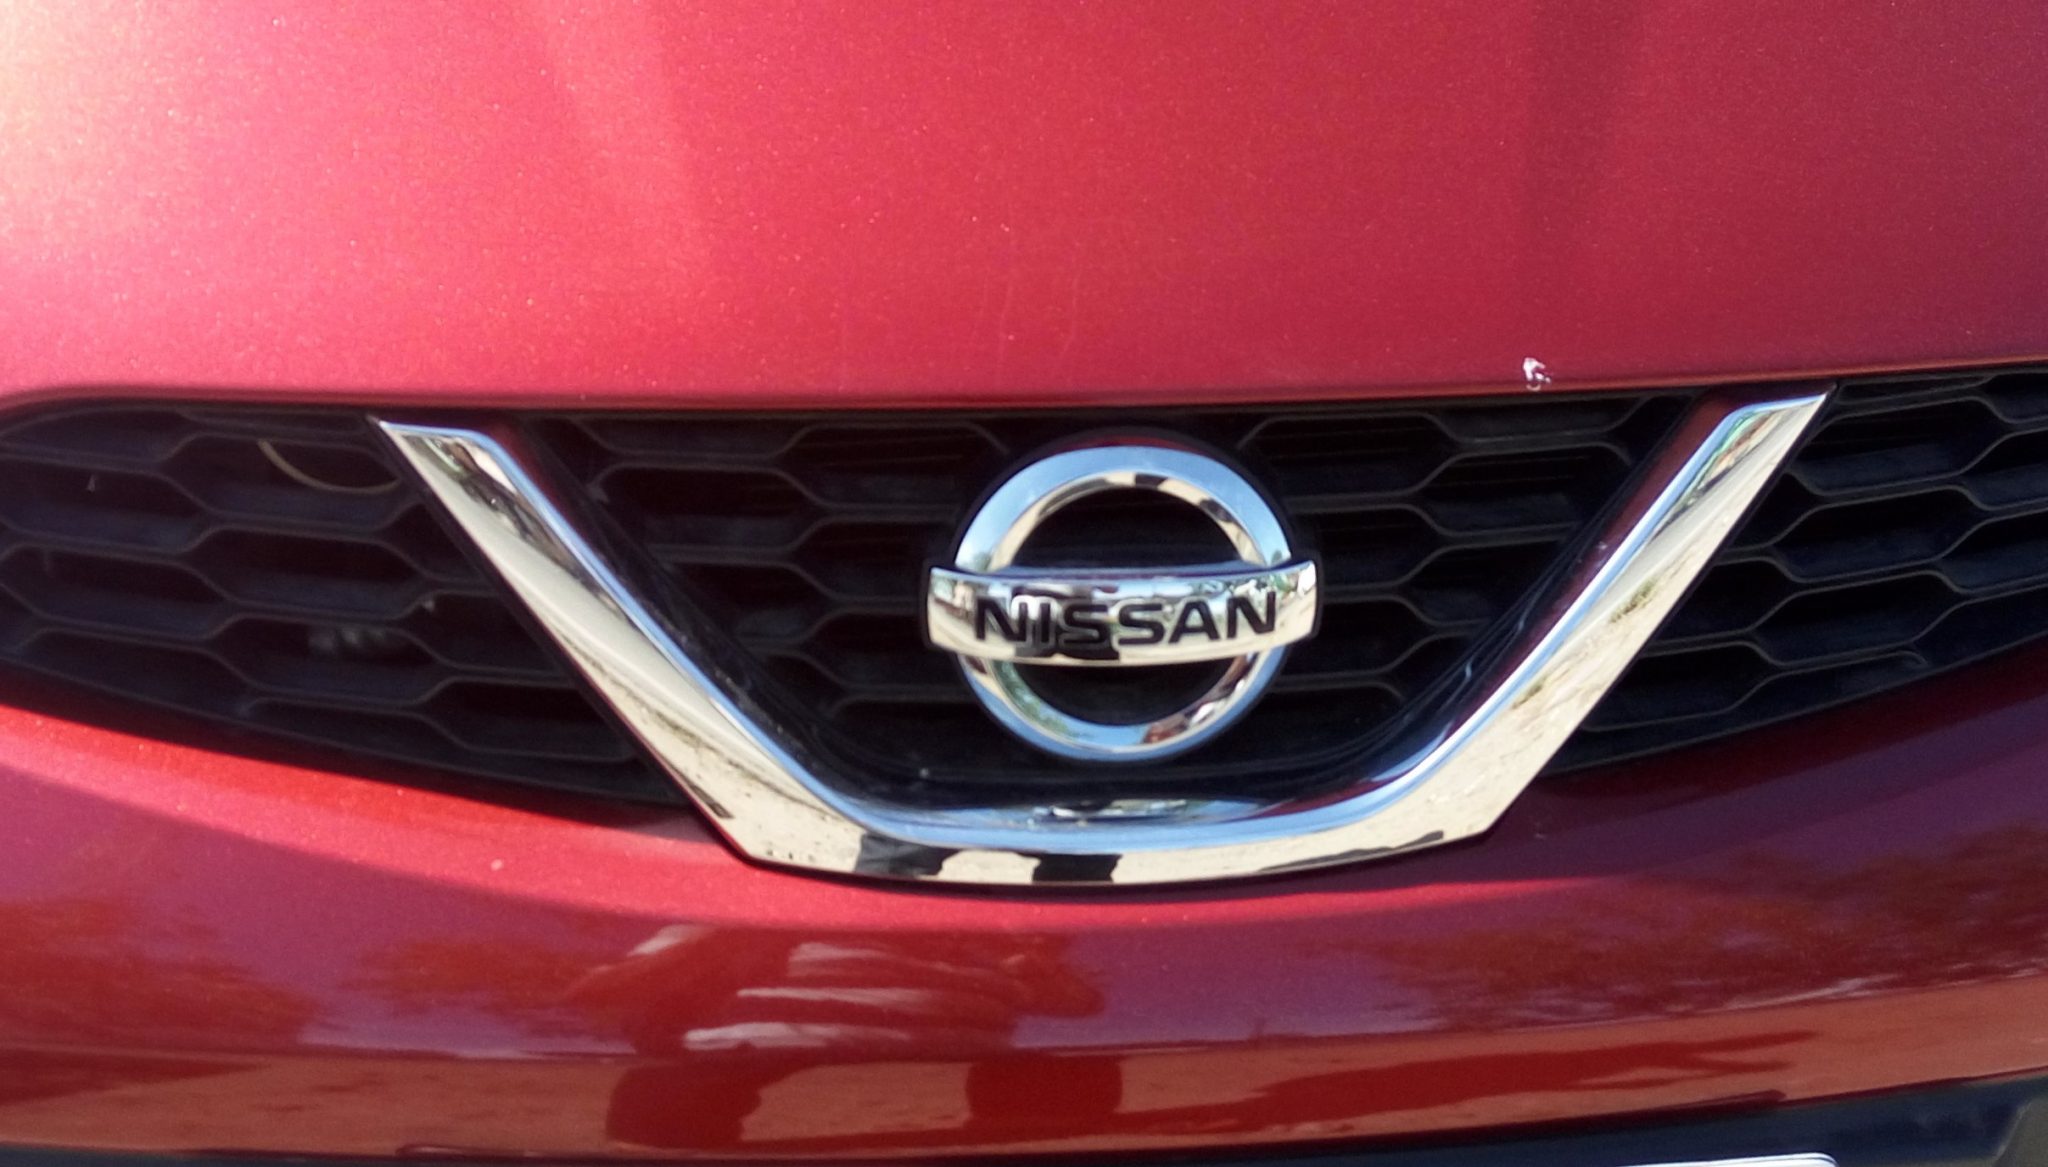 Nissan kena imbas standar emisi eropa